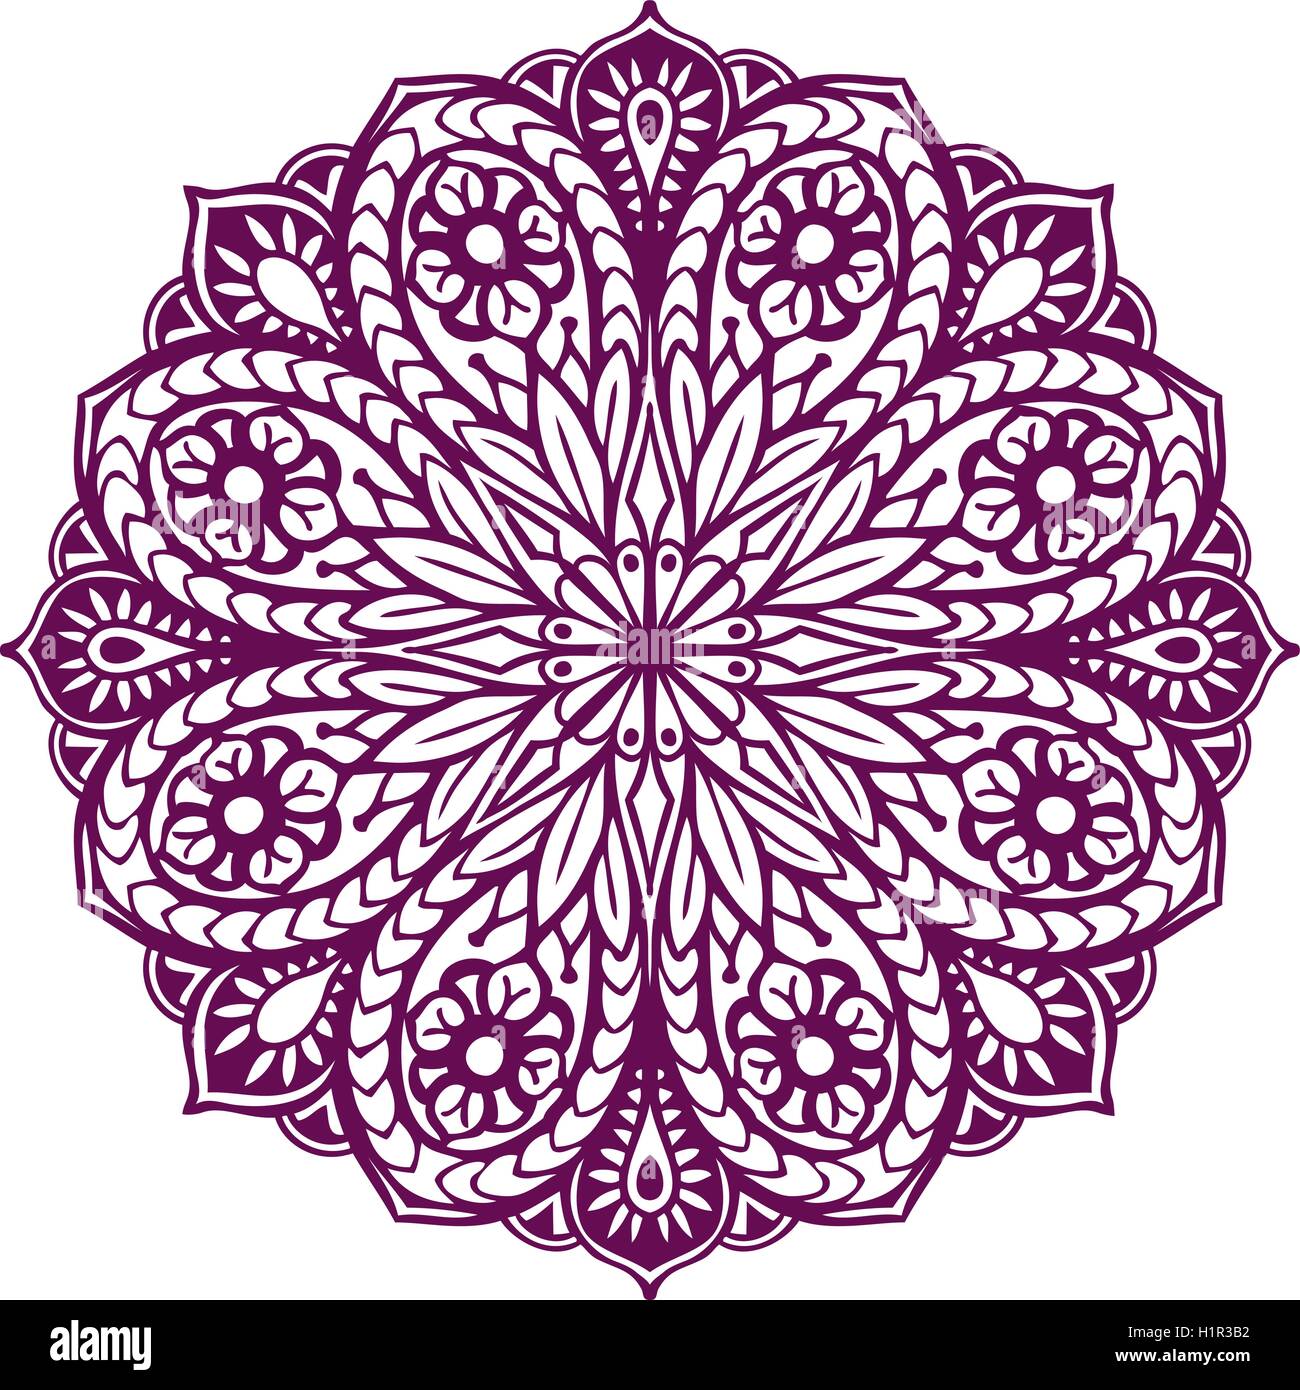 Mandala. Ethnische dekorative floral Ornament. Vektor-Illustration des Stils Stock Vektor